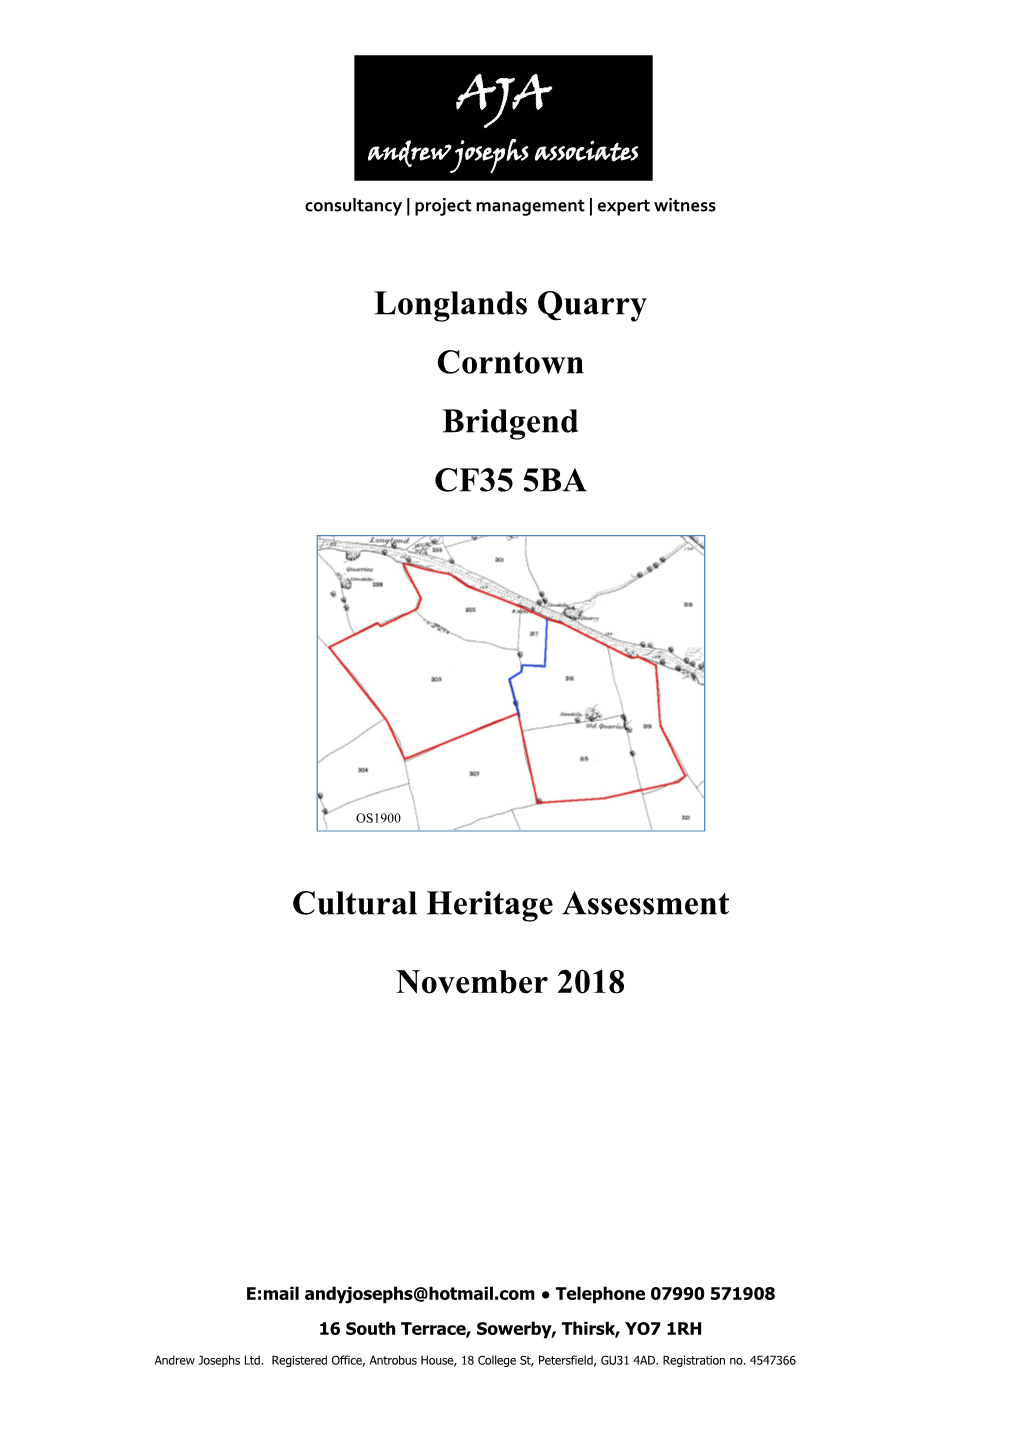 Longlands Quarry Corntown Bridgend CF35 5BA Cultural Heritage